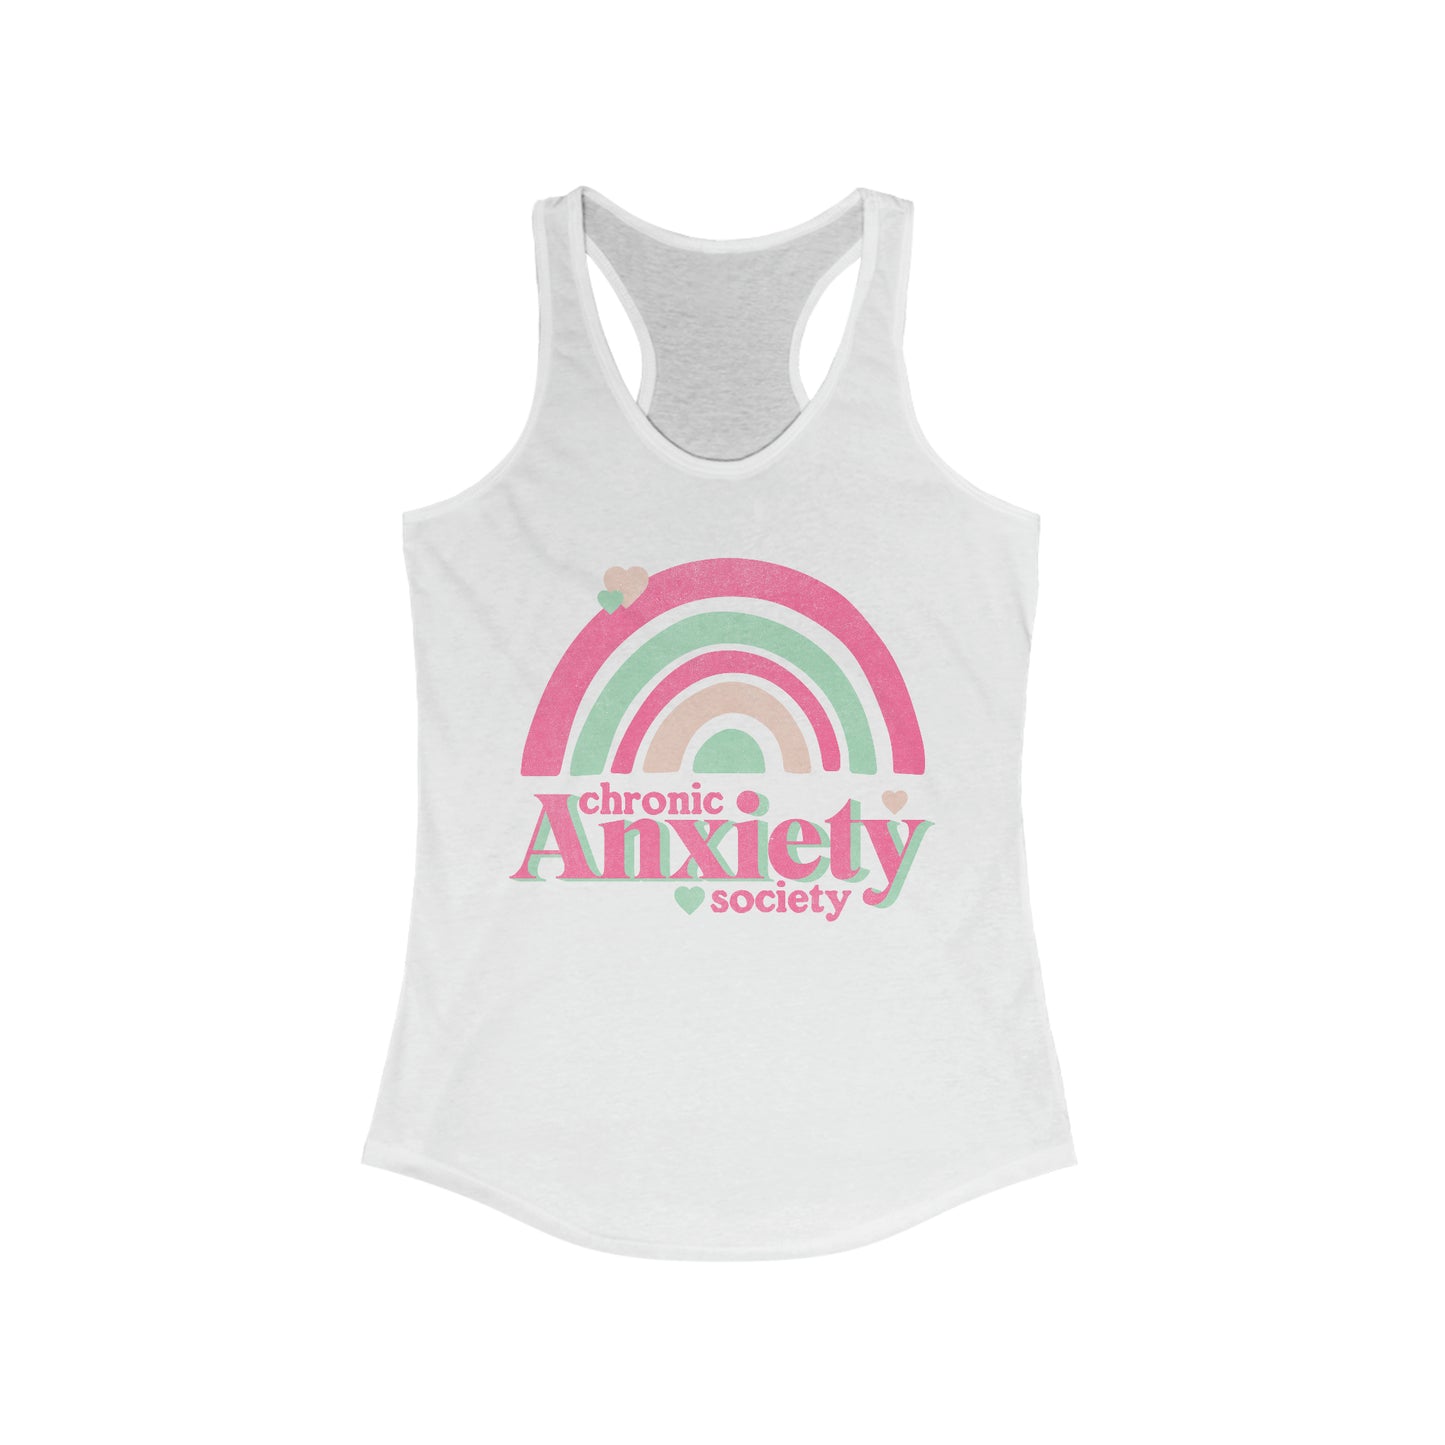 Chronic Anxiety Society - Women's Ideal Racerback Tank